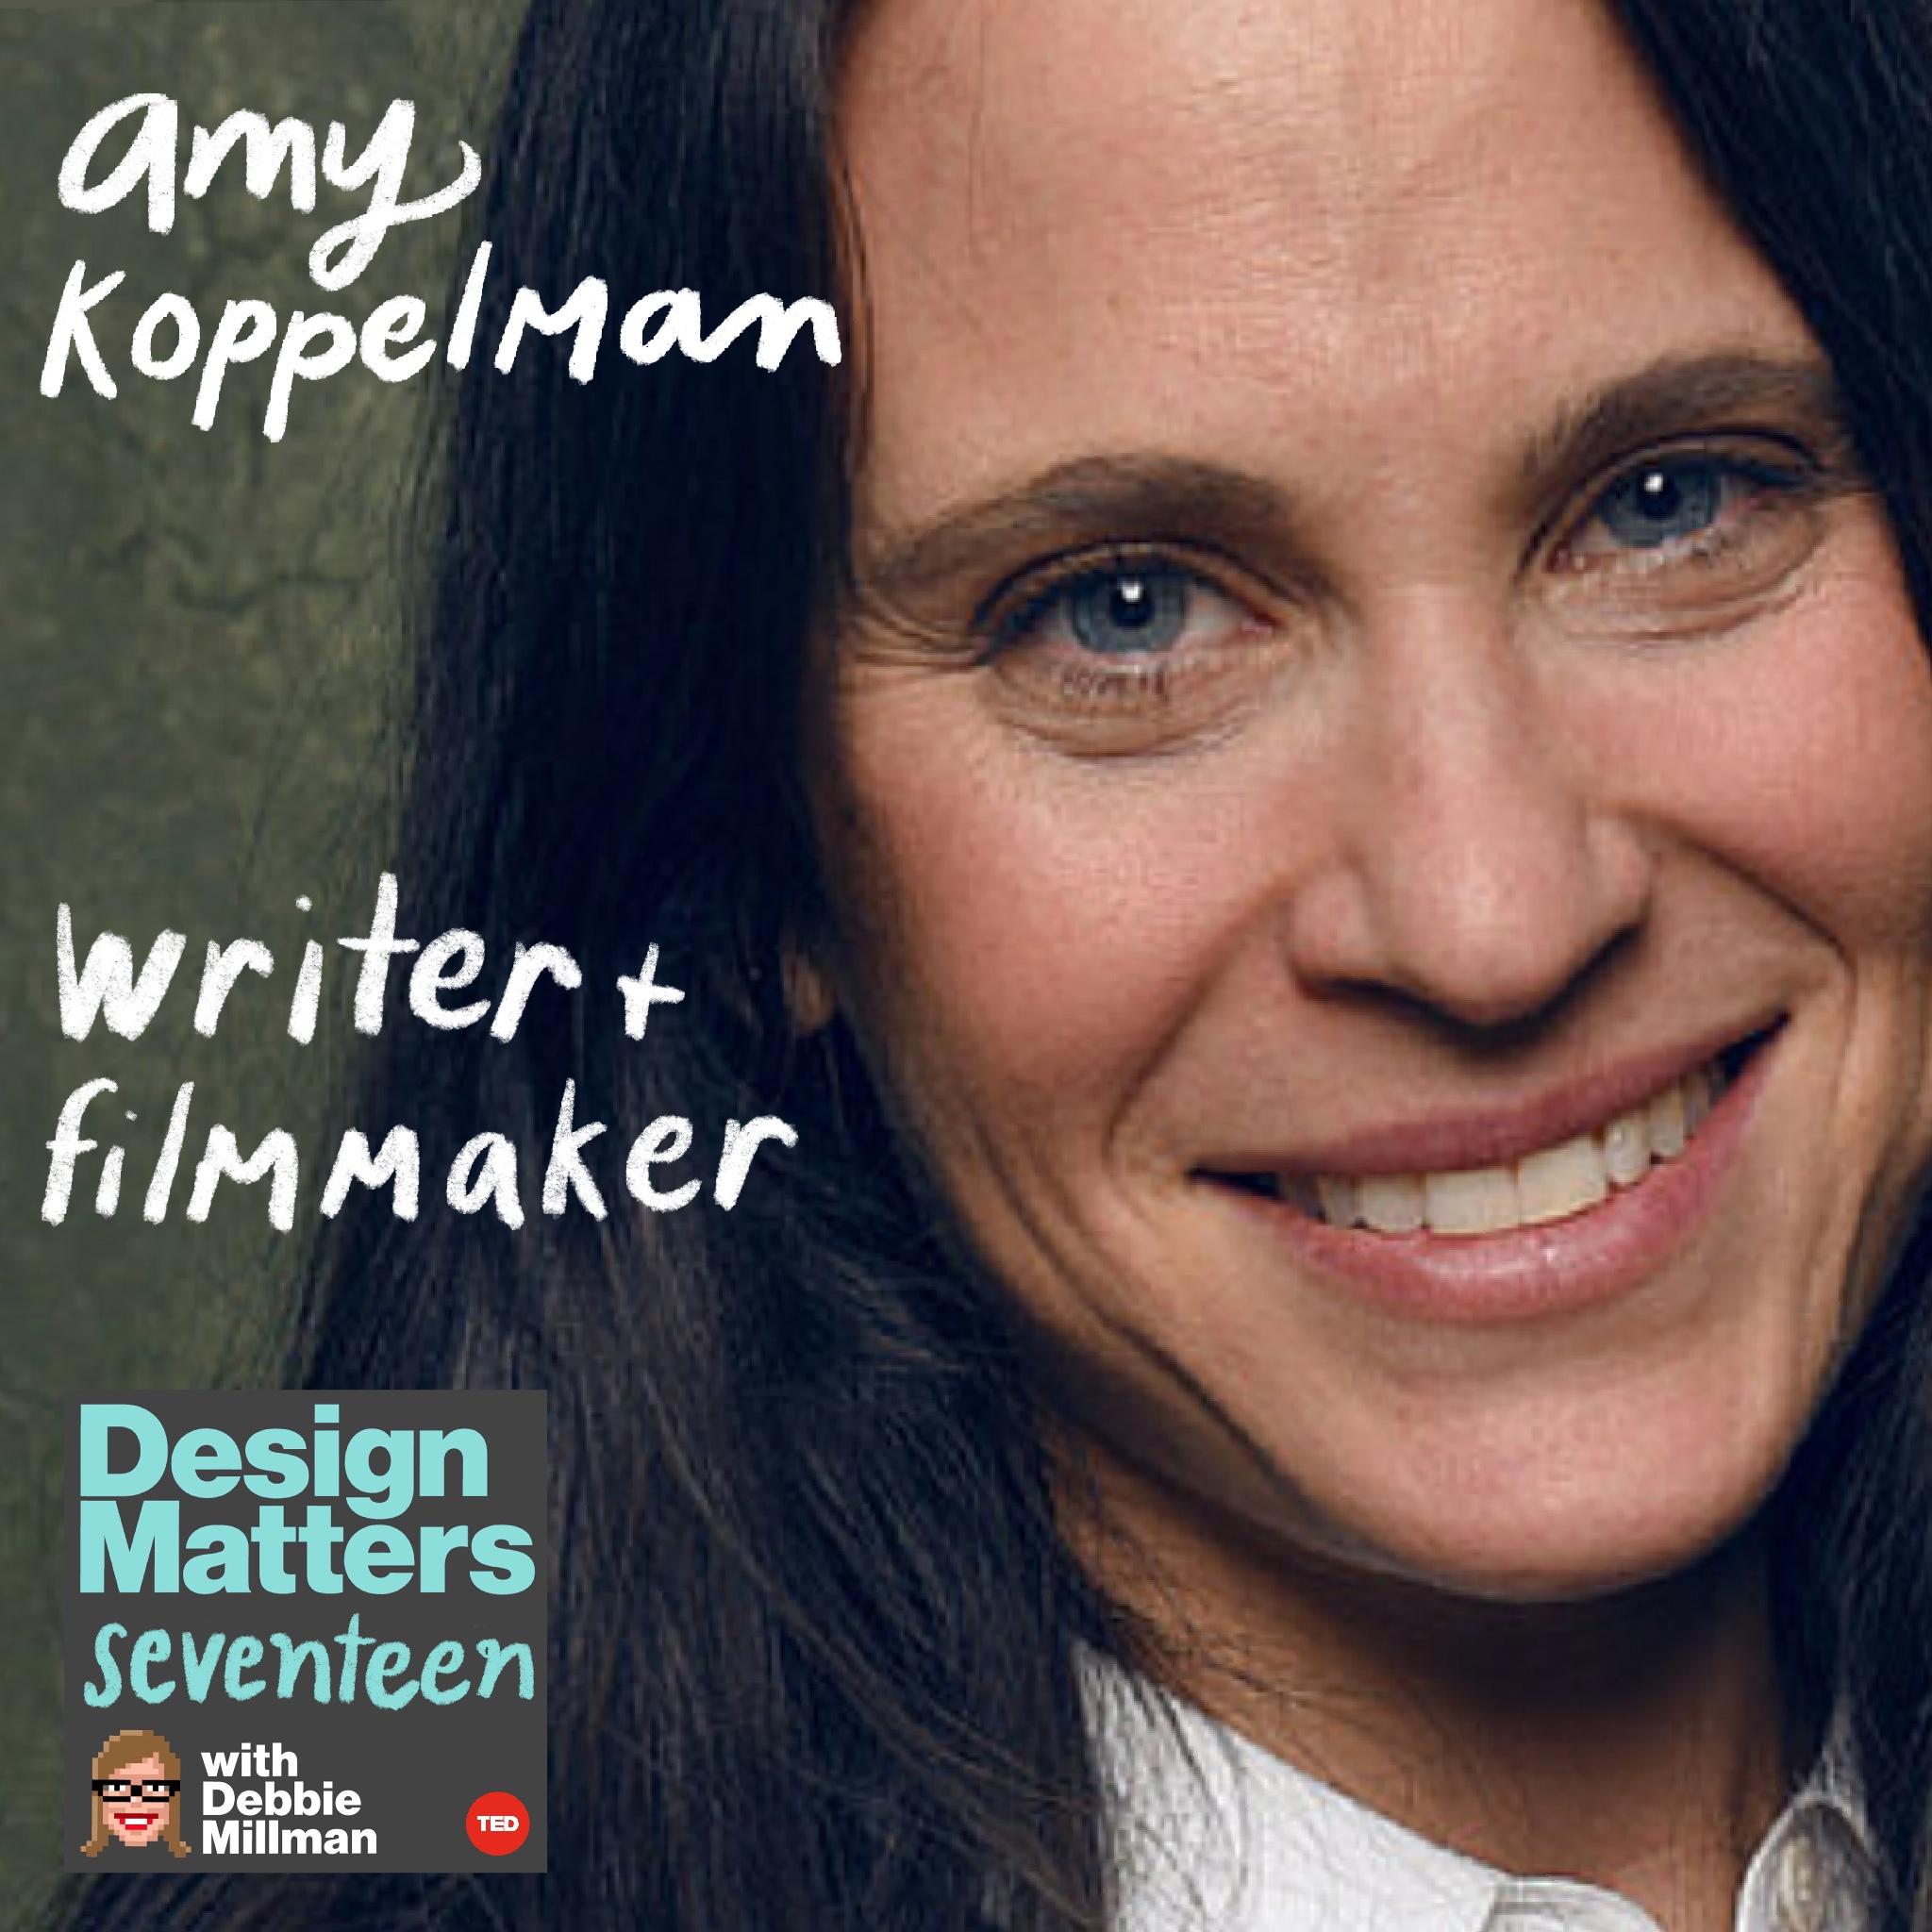 Thumbnail for "Amy Koppelman".